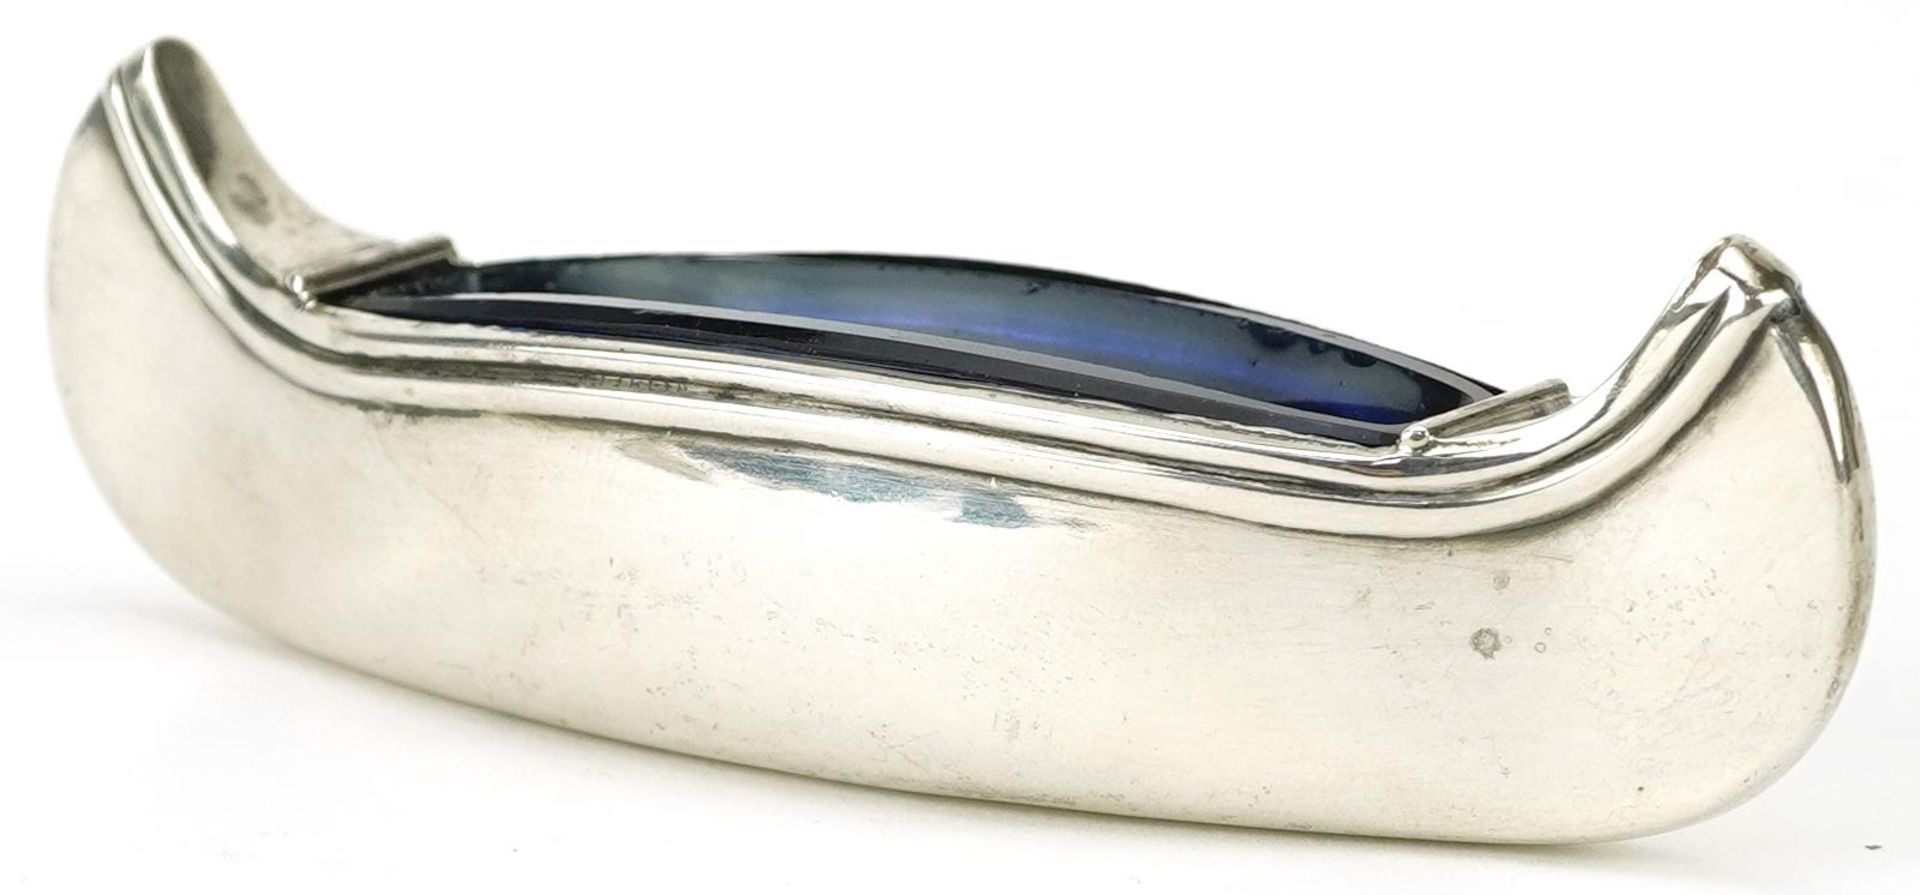 Adie & Lovekin Ltd, Edwardian silver open table salt in the form of a boat, with blue glass liner,